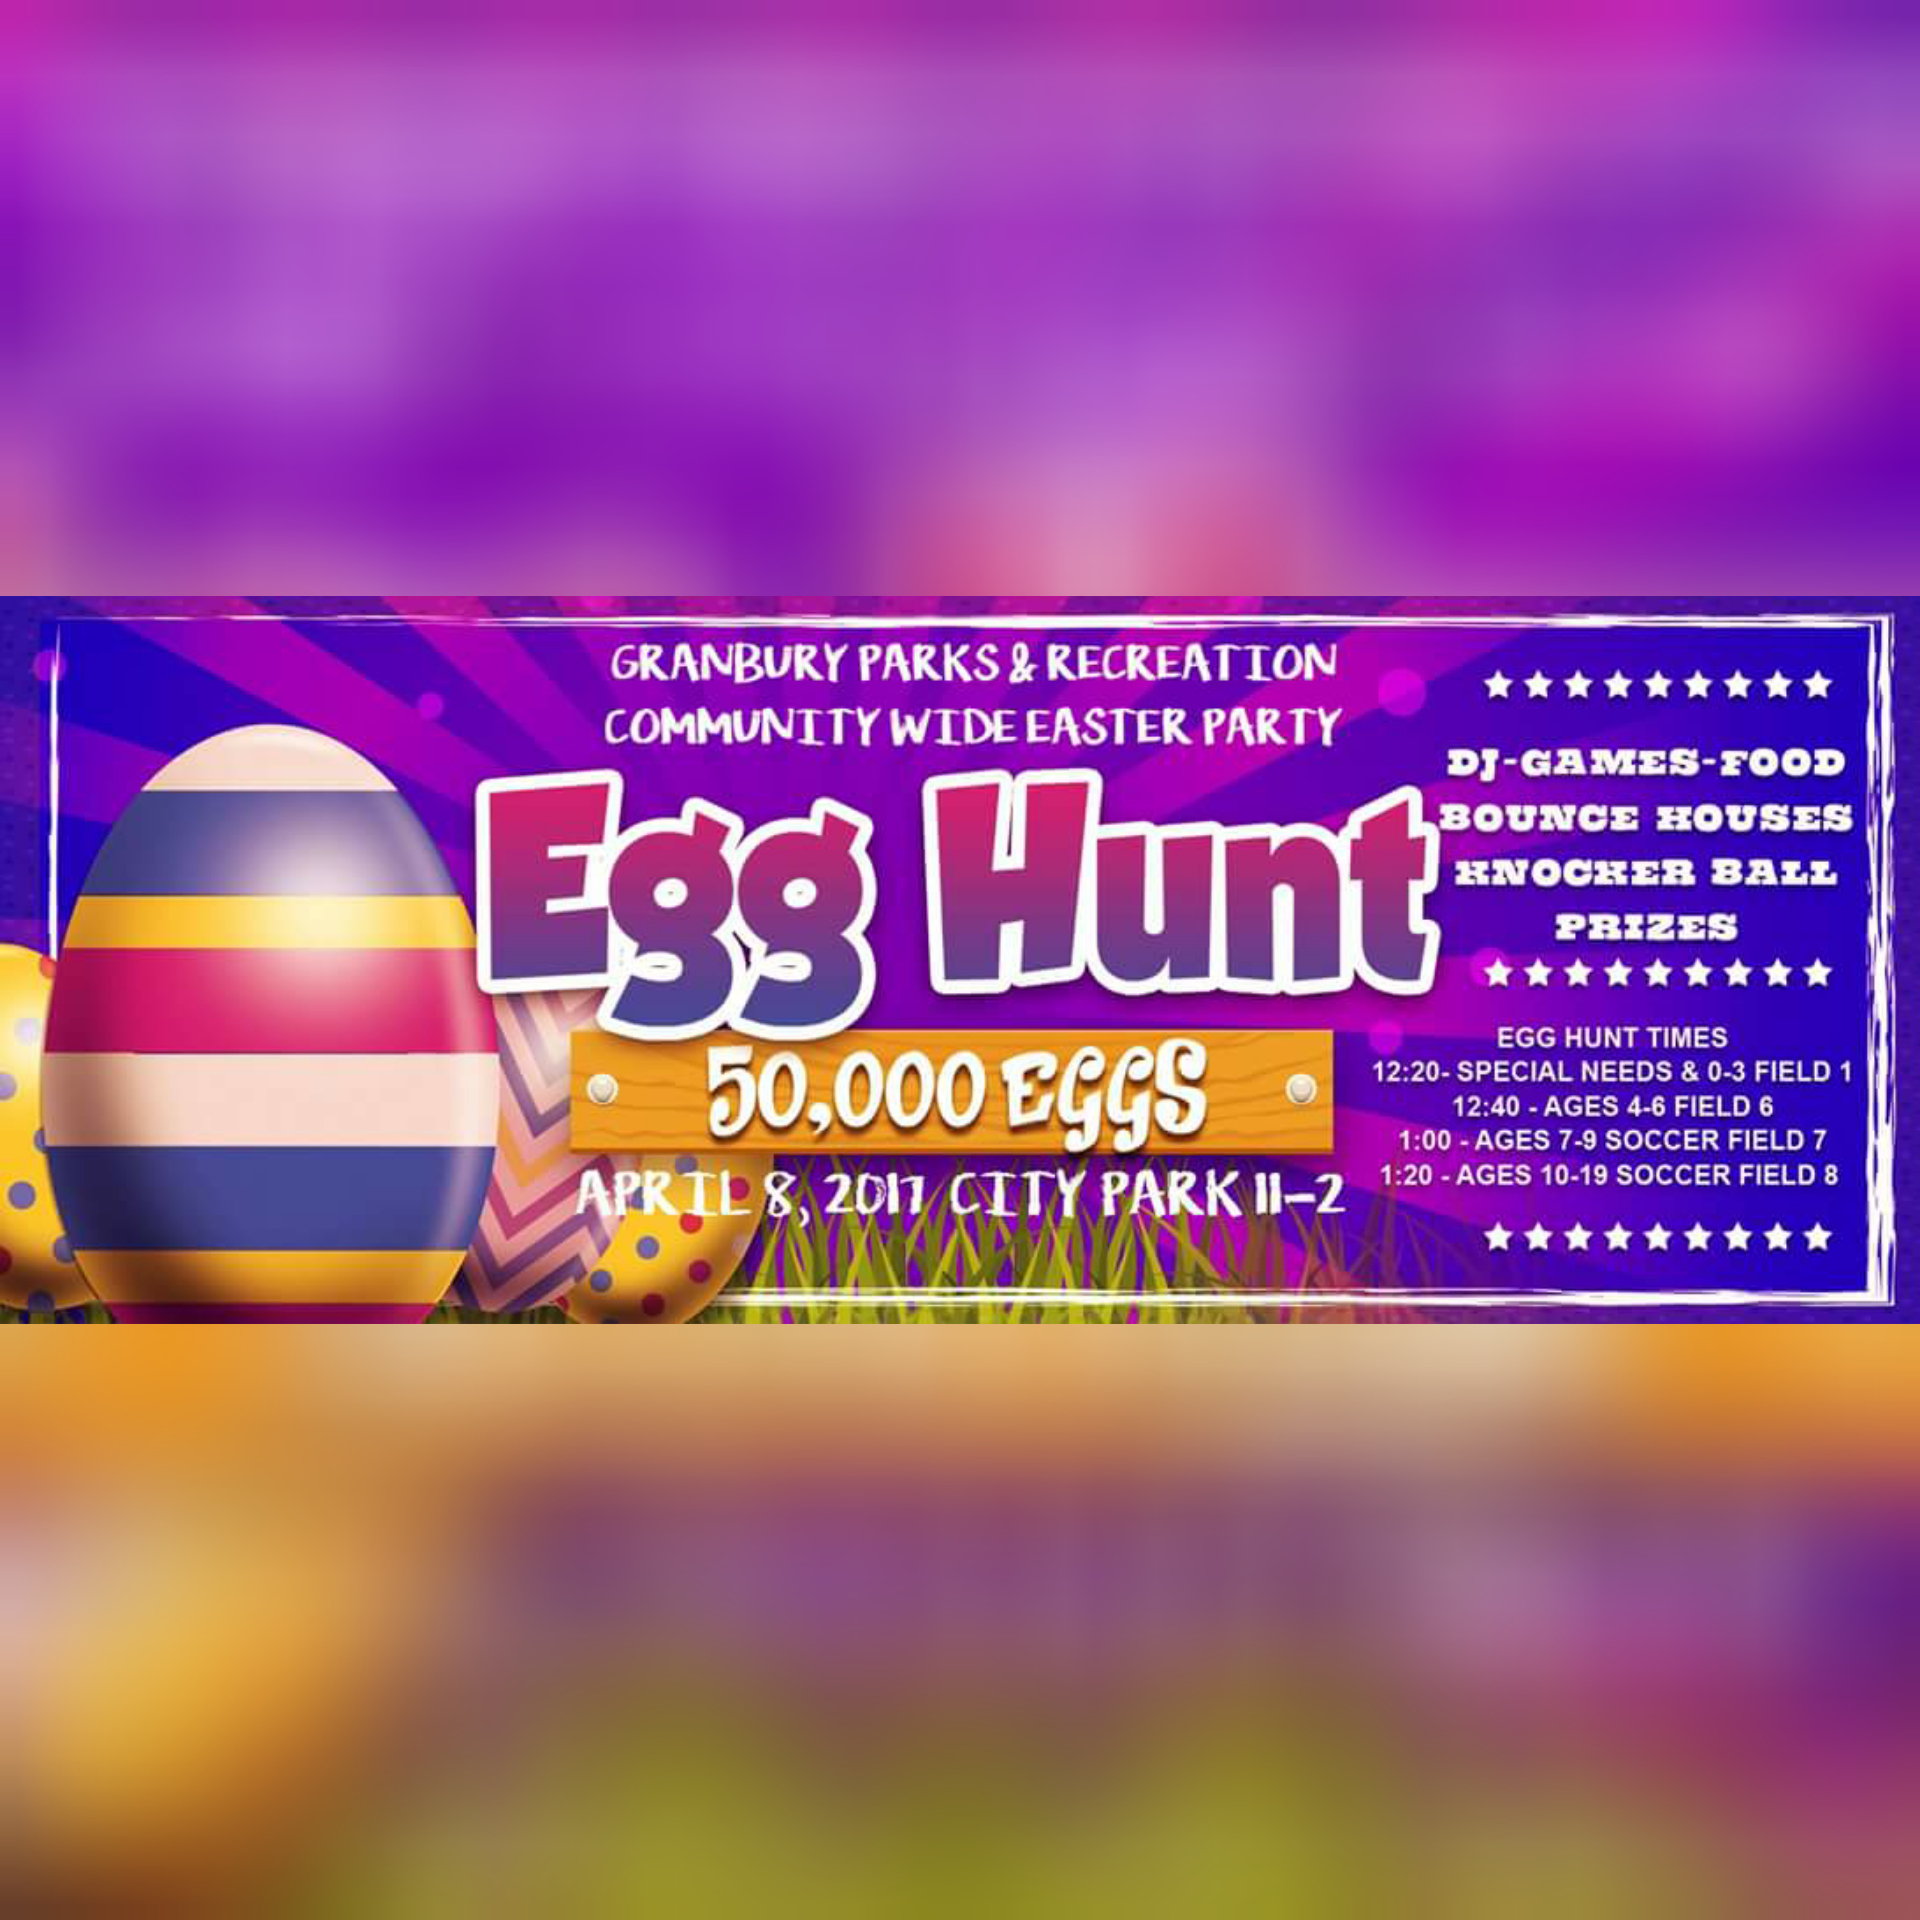 Free City Park Easter Egg Hunt Coming April 8th!